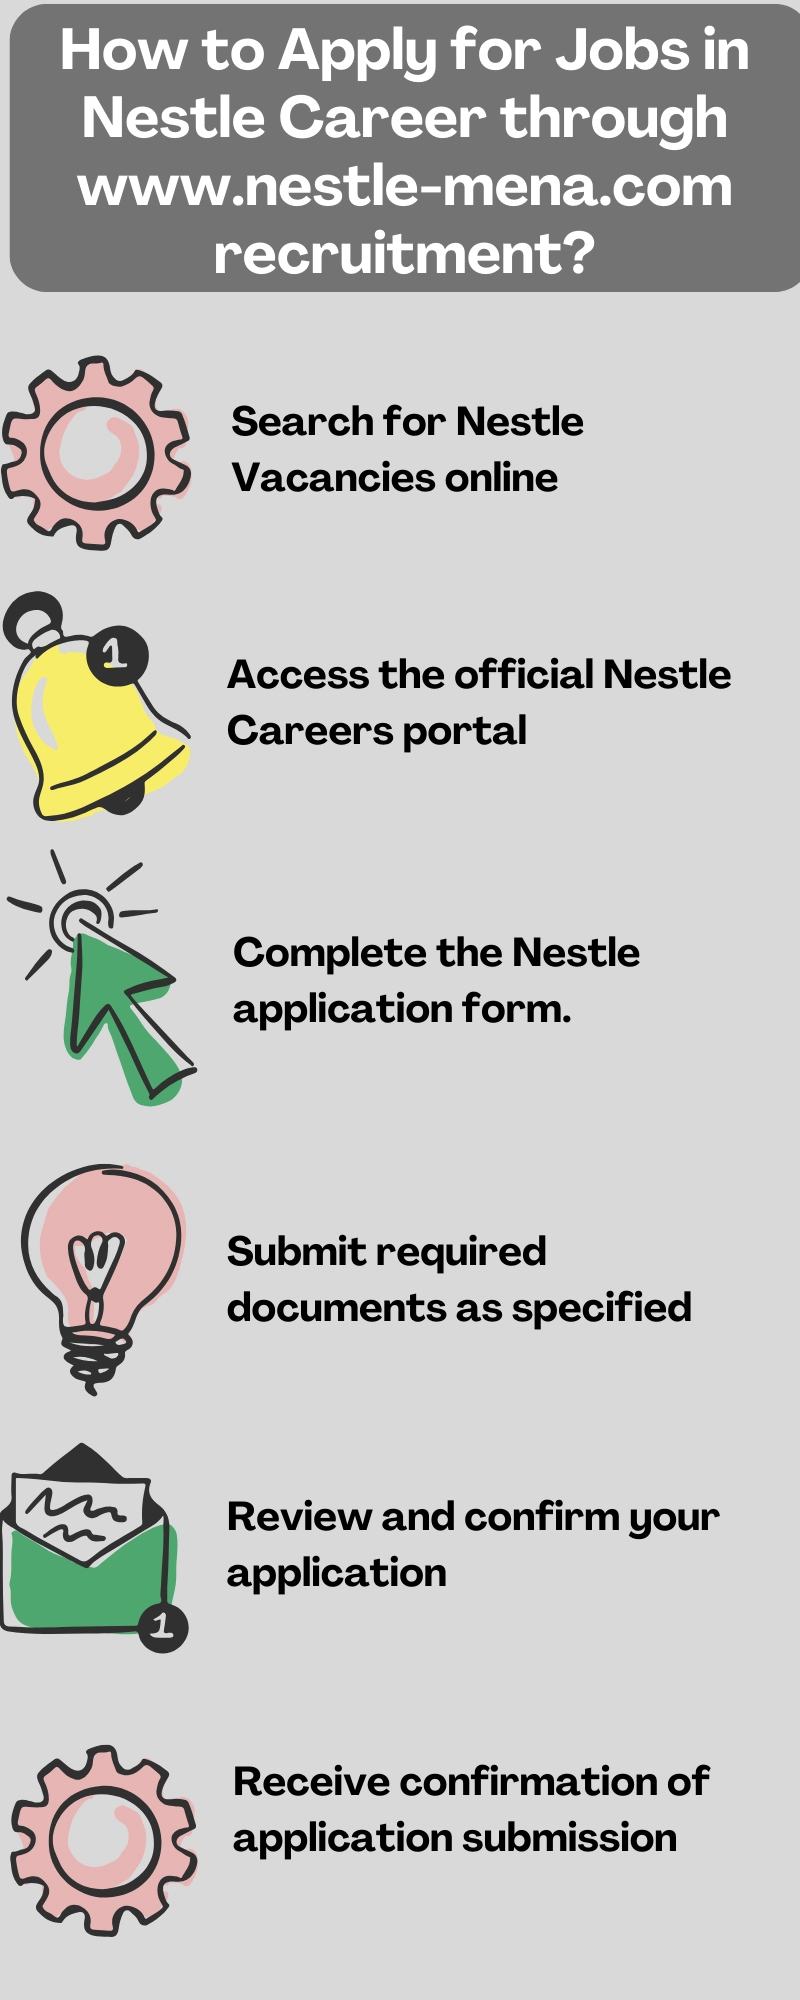 How to Apply for Jobs in Nestle Career through www.nestle-mena.com recruitment?